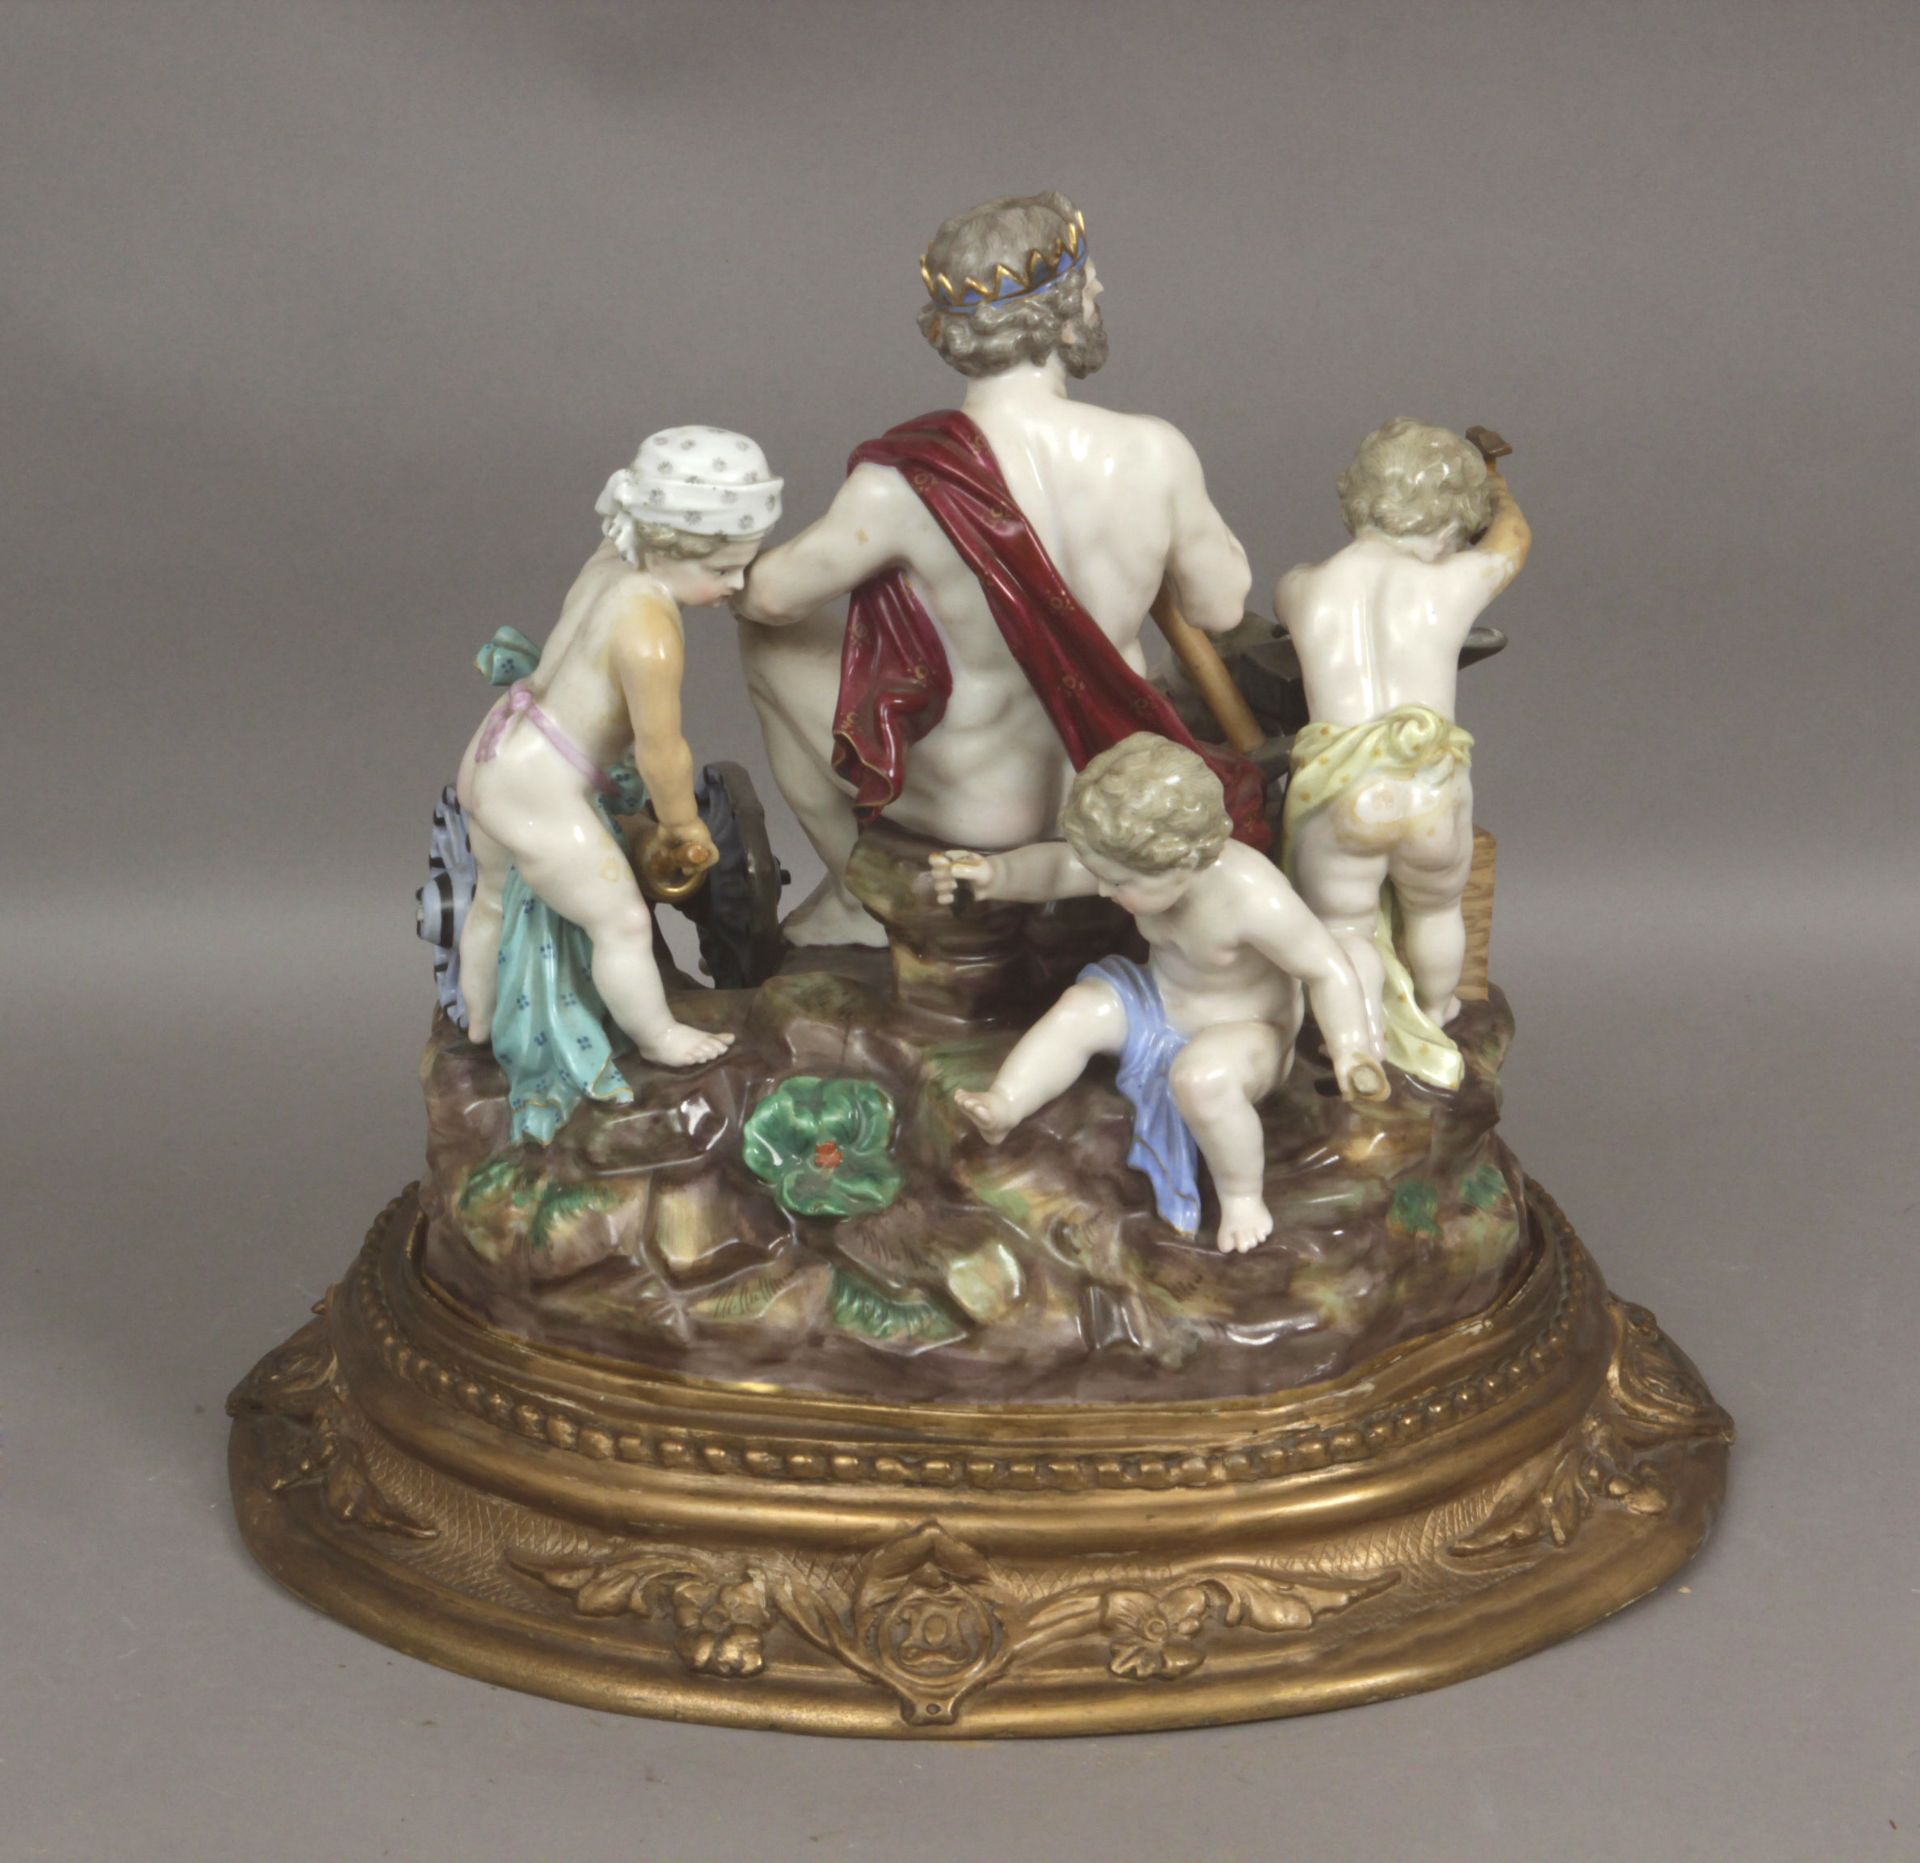 A 19th century mythological scene in Meissen porcelain - Image 4 of 6